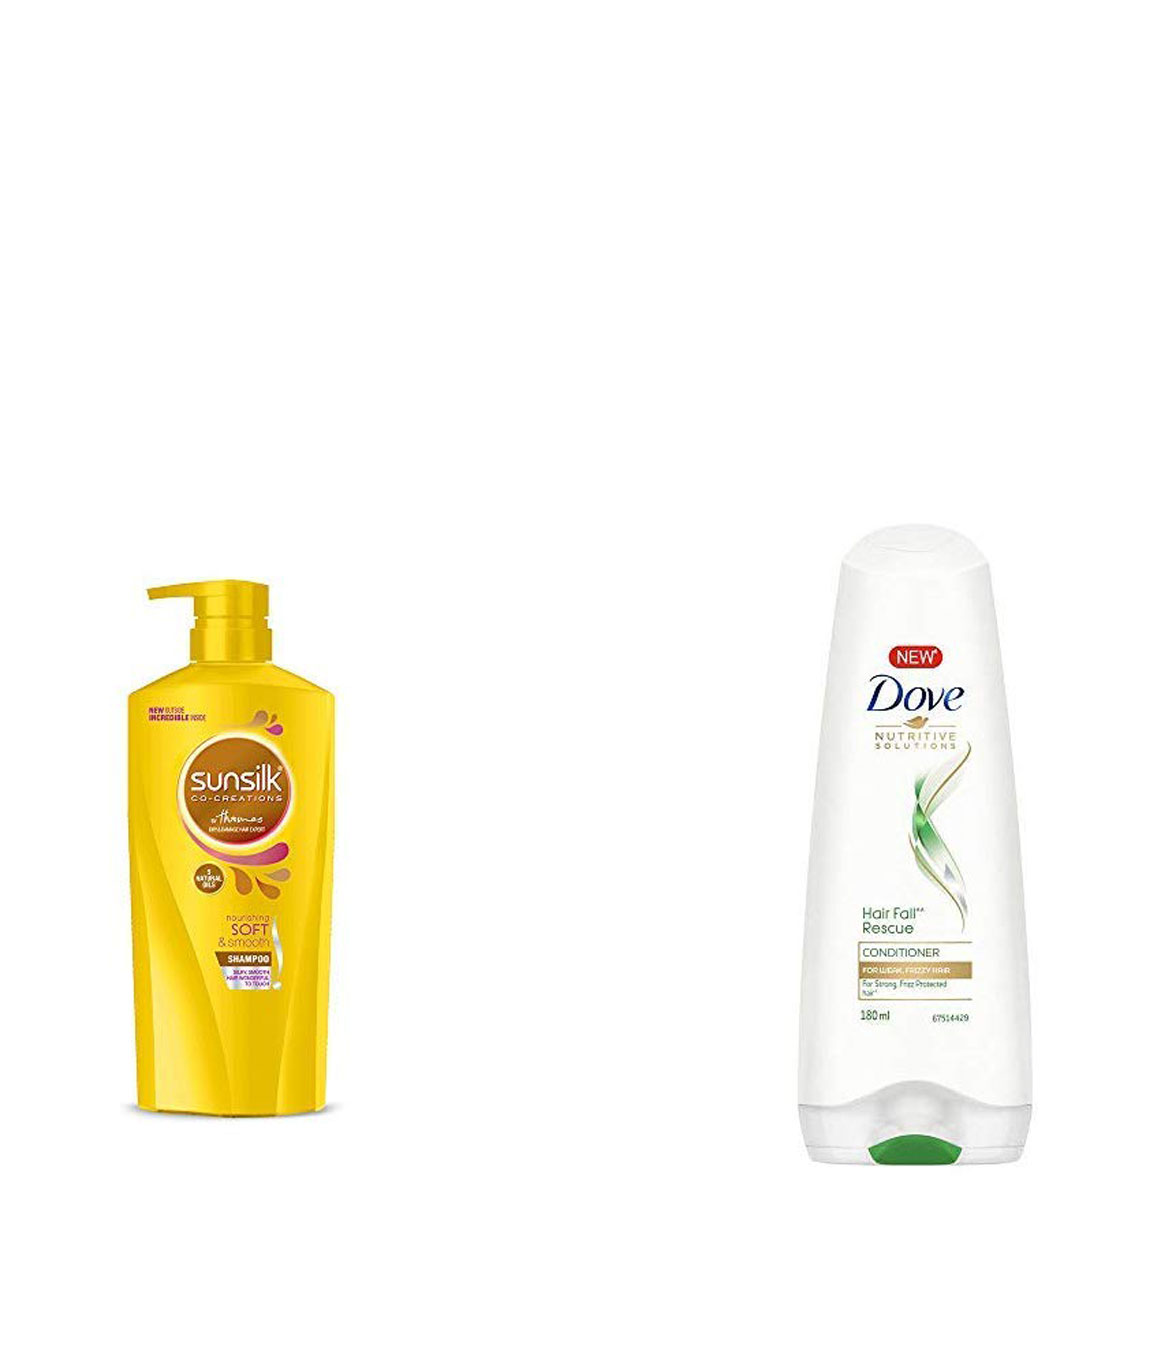 Sunsilk Nourishing Soft & Smooth Shampoo 650ml & Dove Hair Fall Rescue Conditioner, 180ml